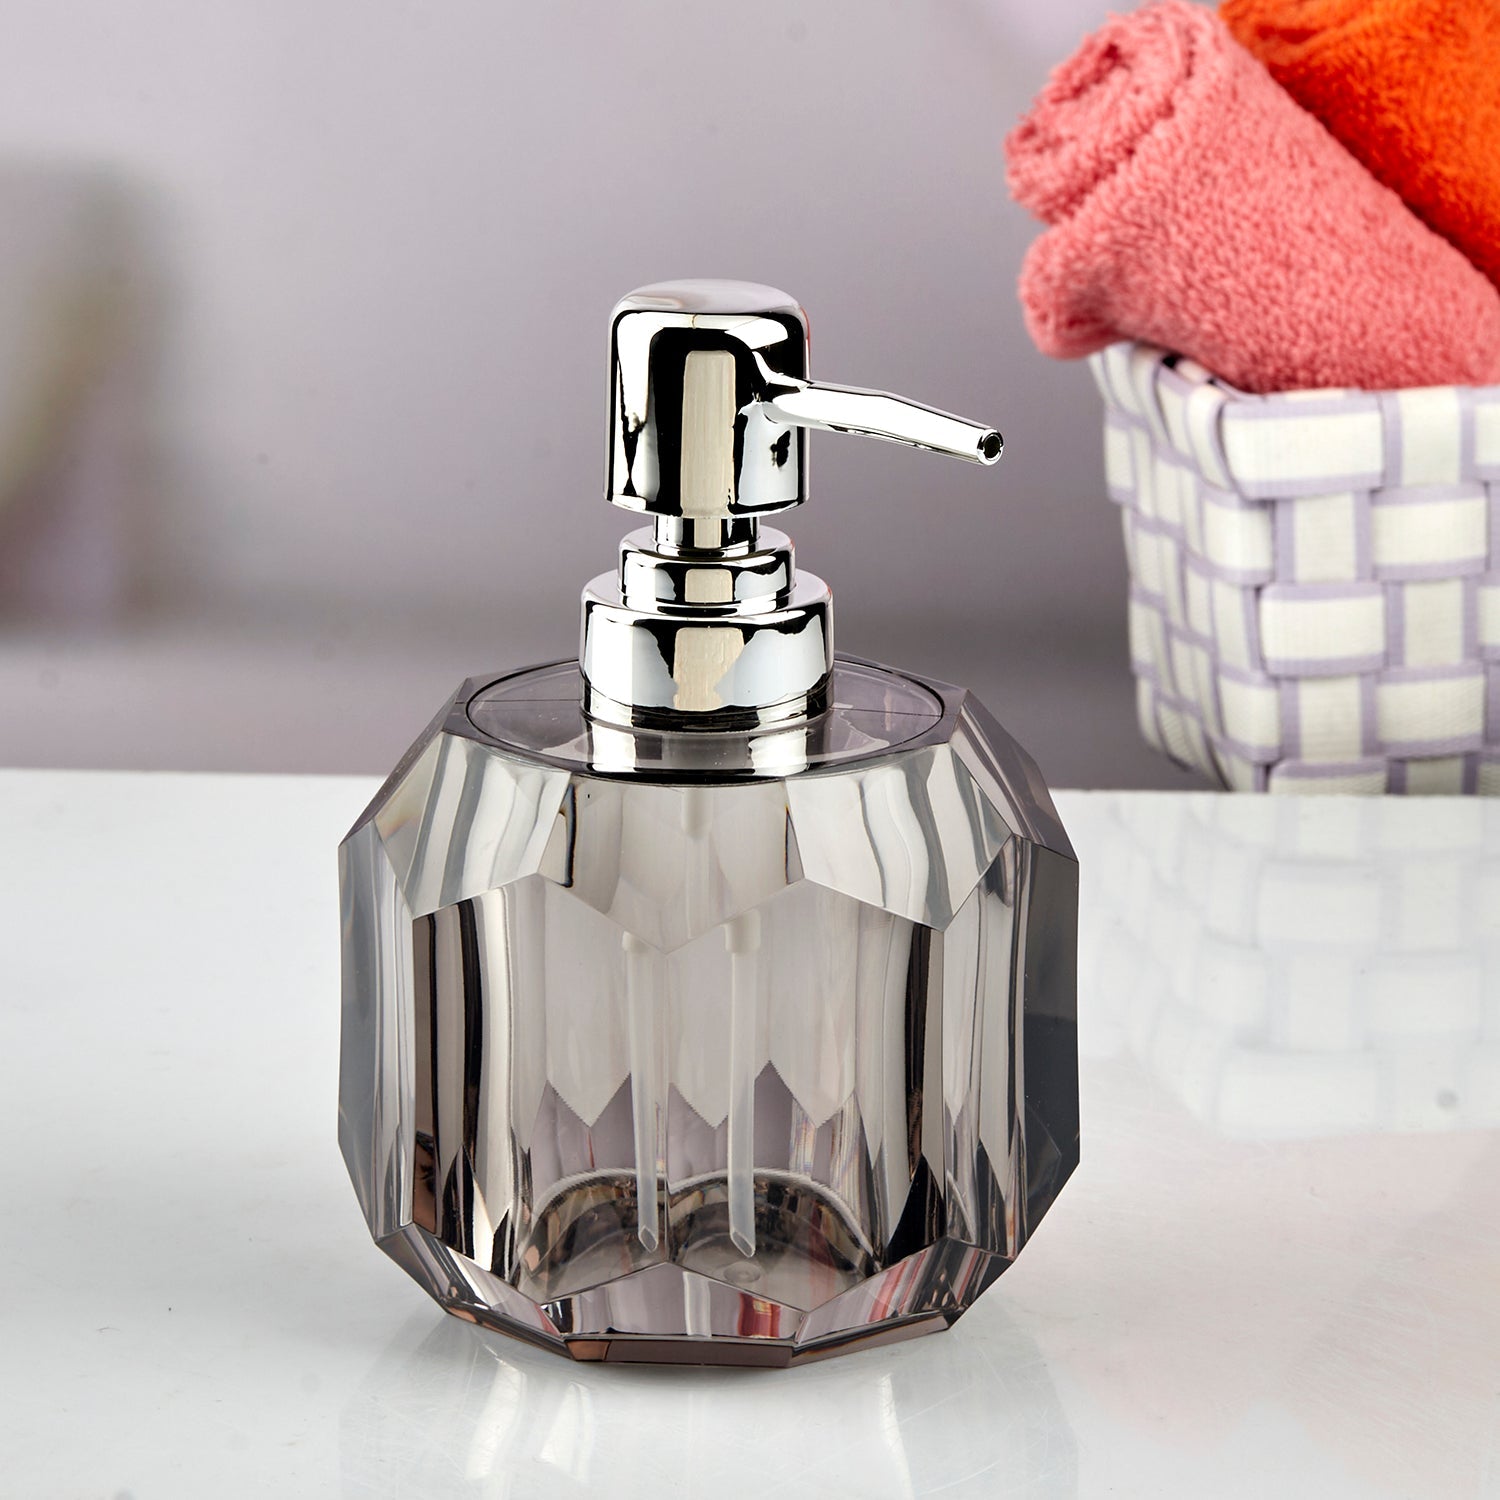 Acrylic Soap Dispenser for Bathroom handwash (10729)